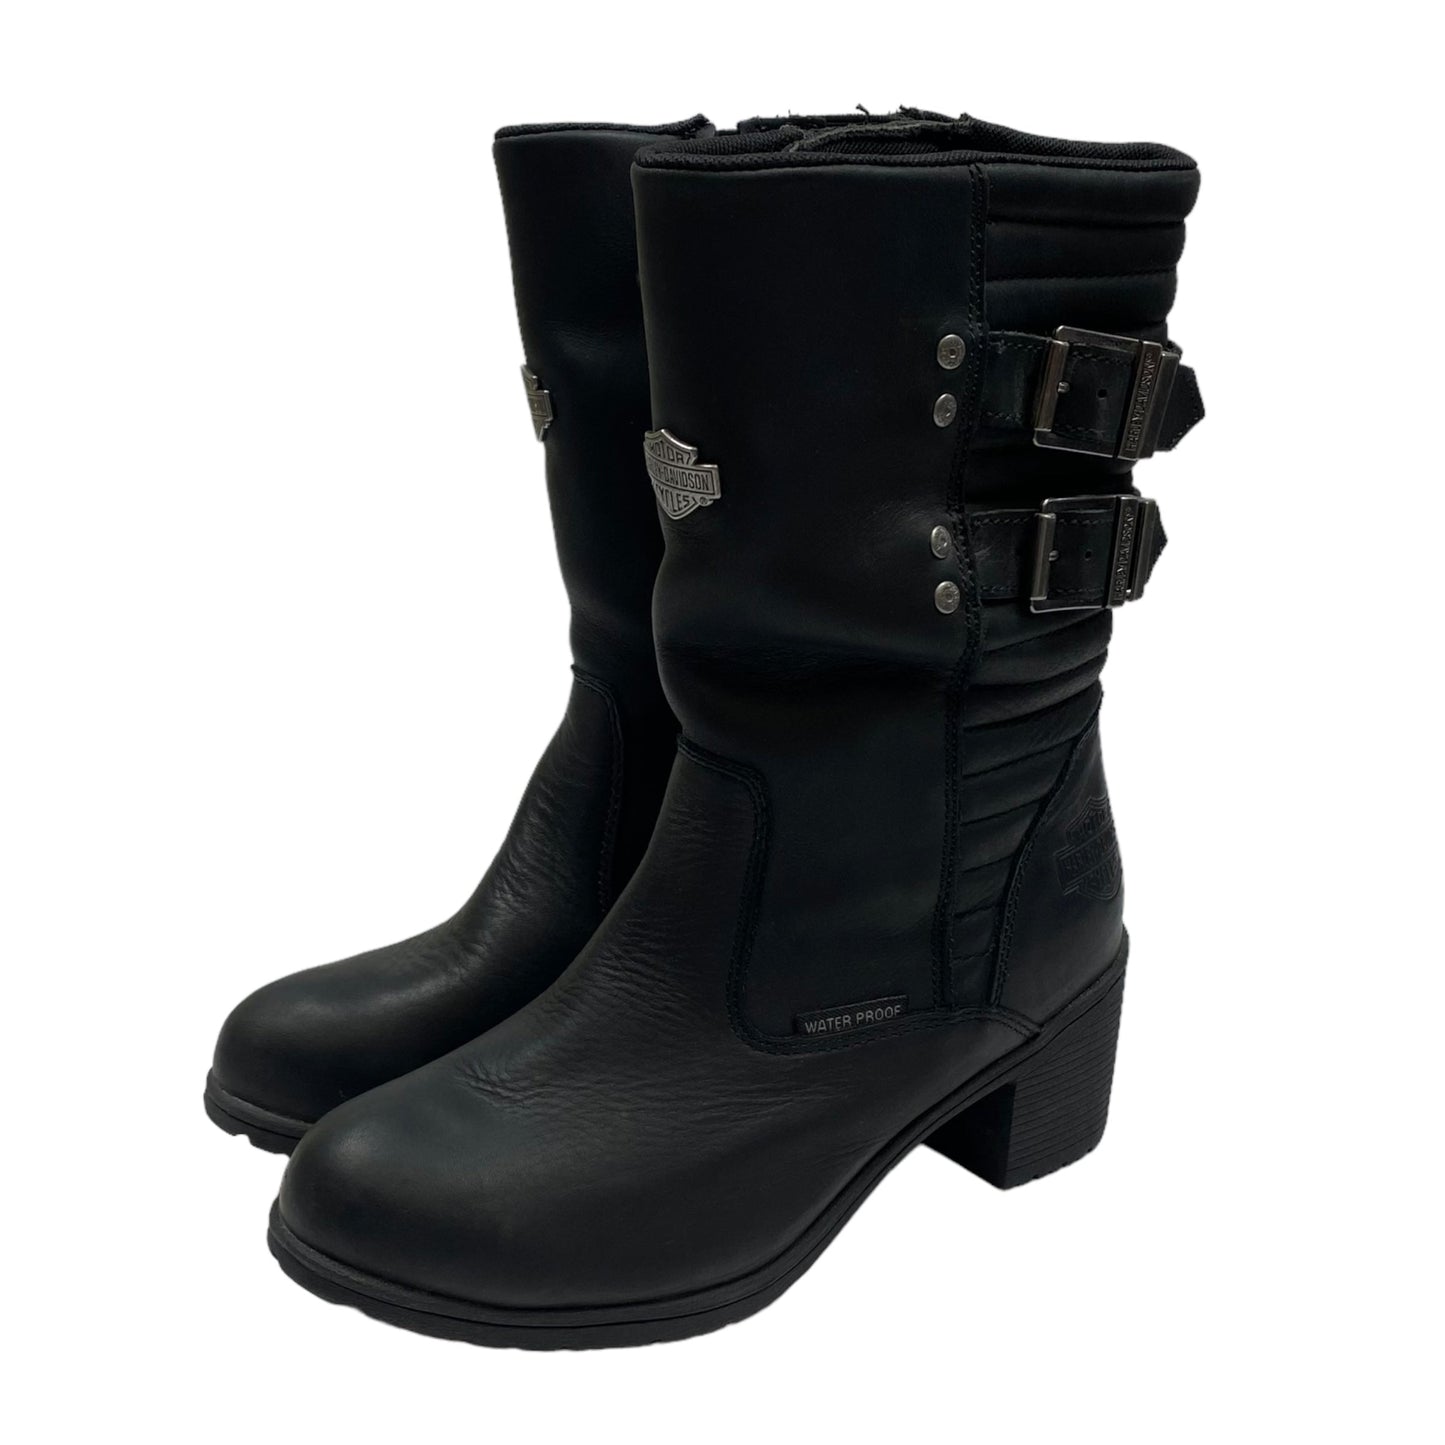 Black Boots Leather Harley Davidson, Size 9